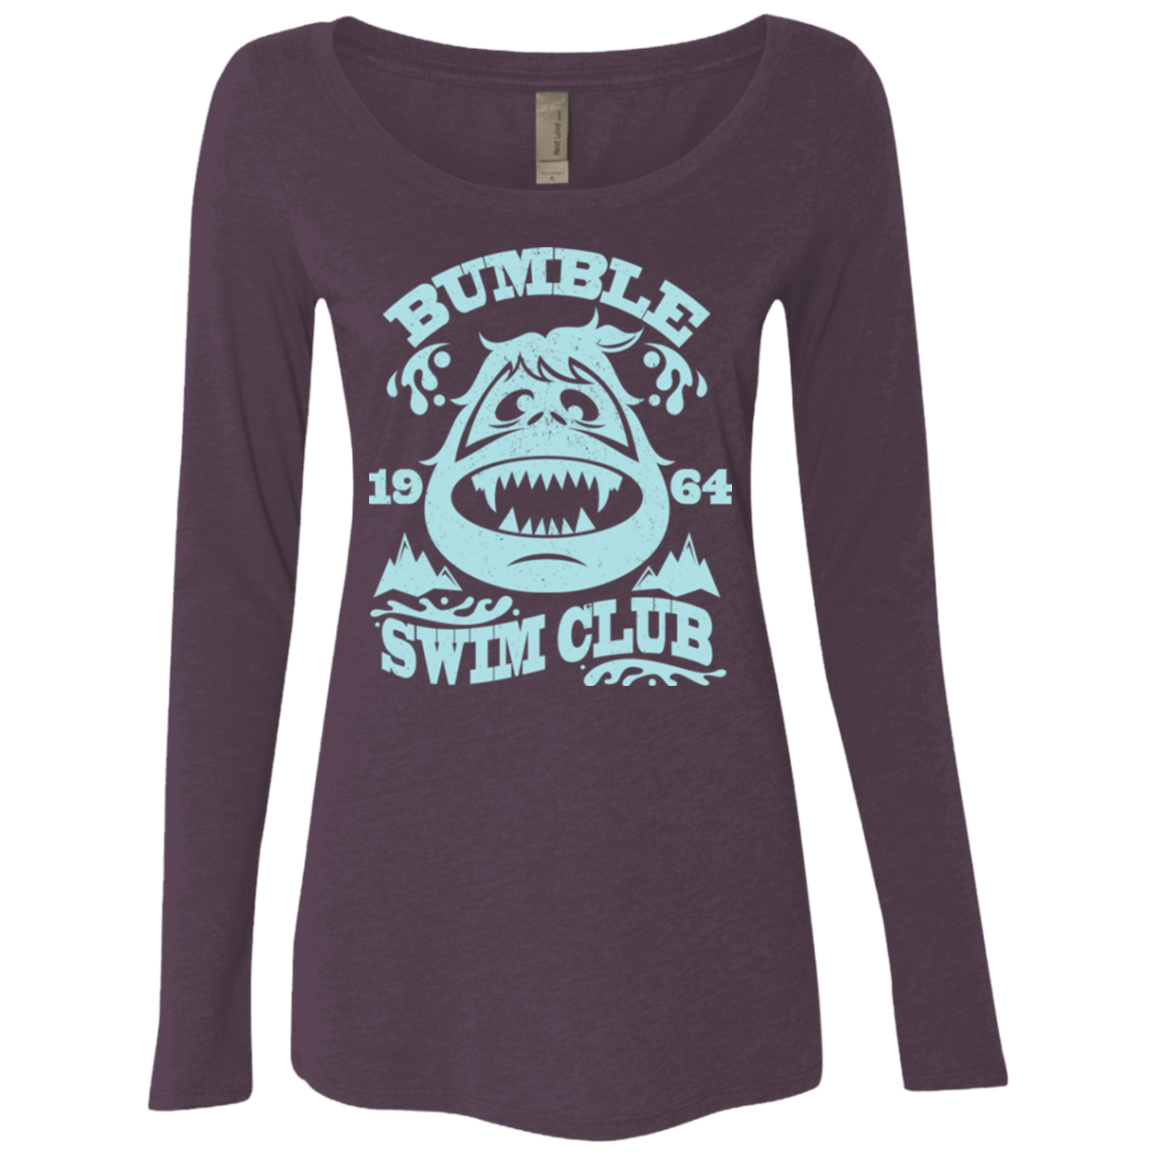 T-Shirts Vintage Purple / Small Bumble Club Women's Triblend Long Sleeve Shirt